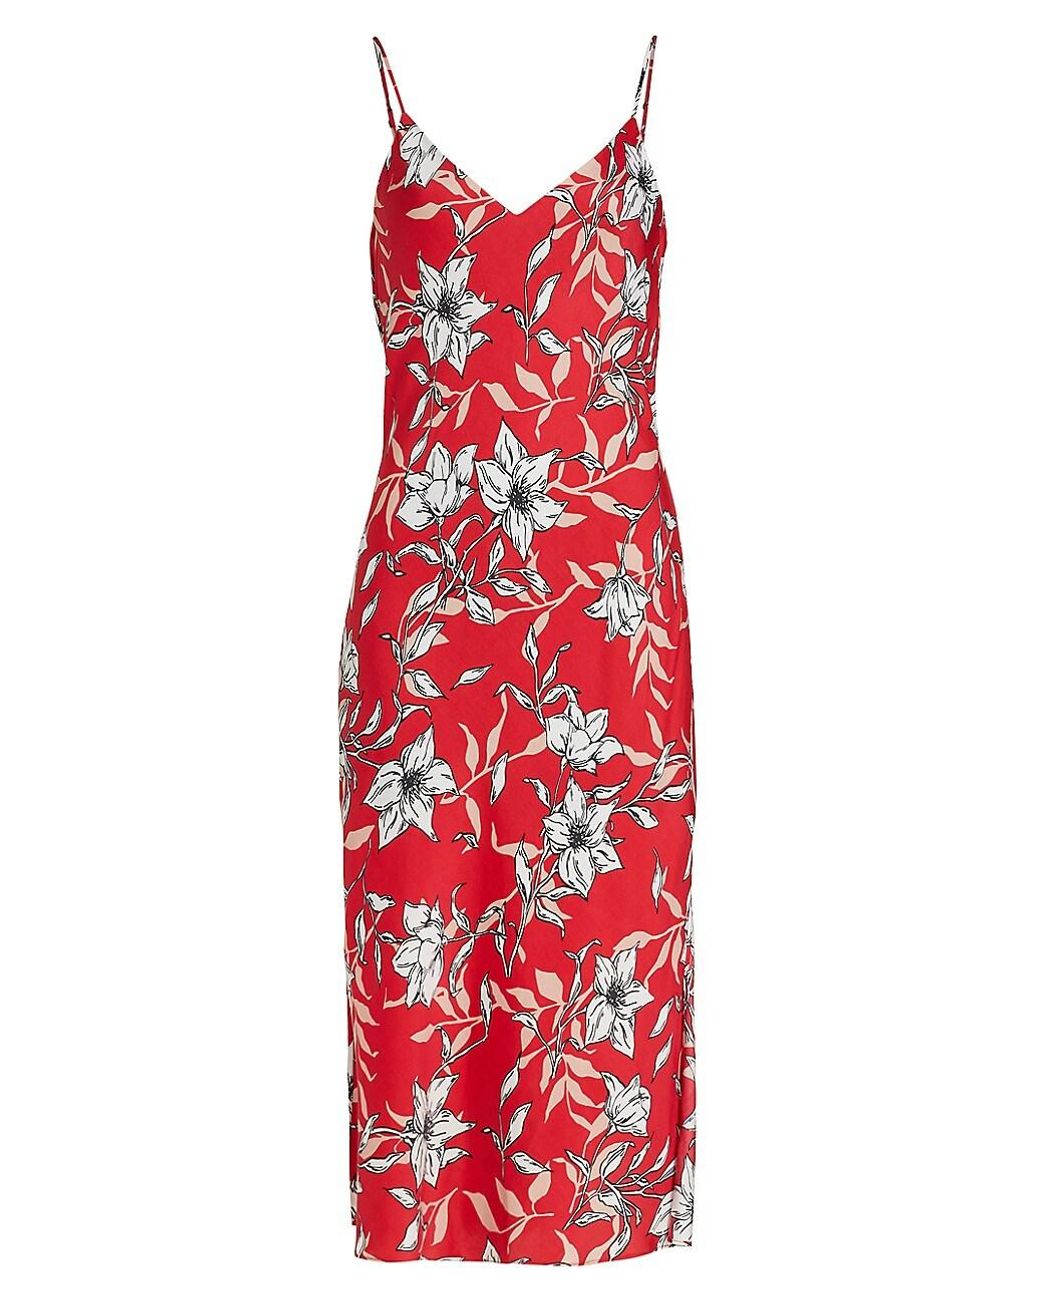 Rag & Bone Mallory Floral Slip Dress in Red | Lyst